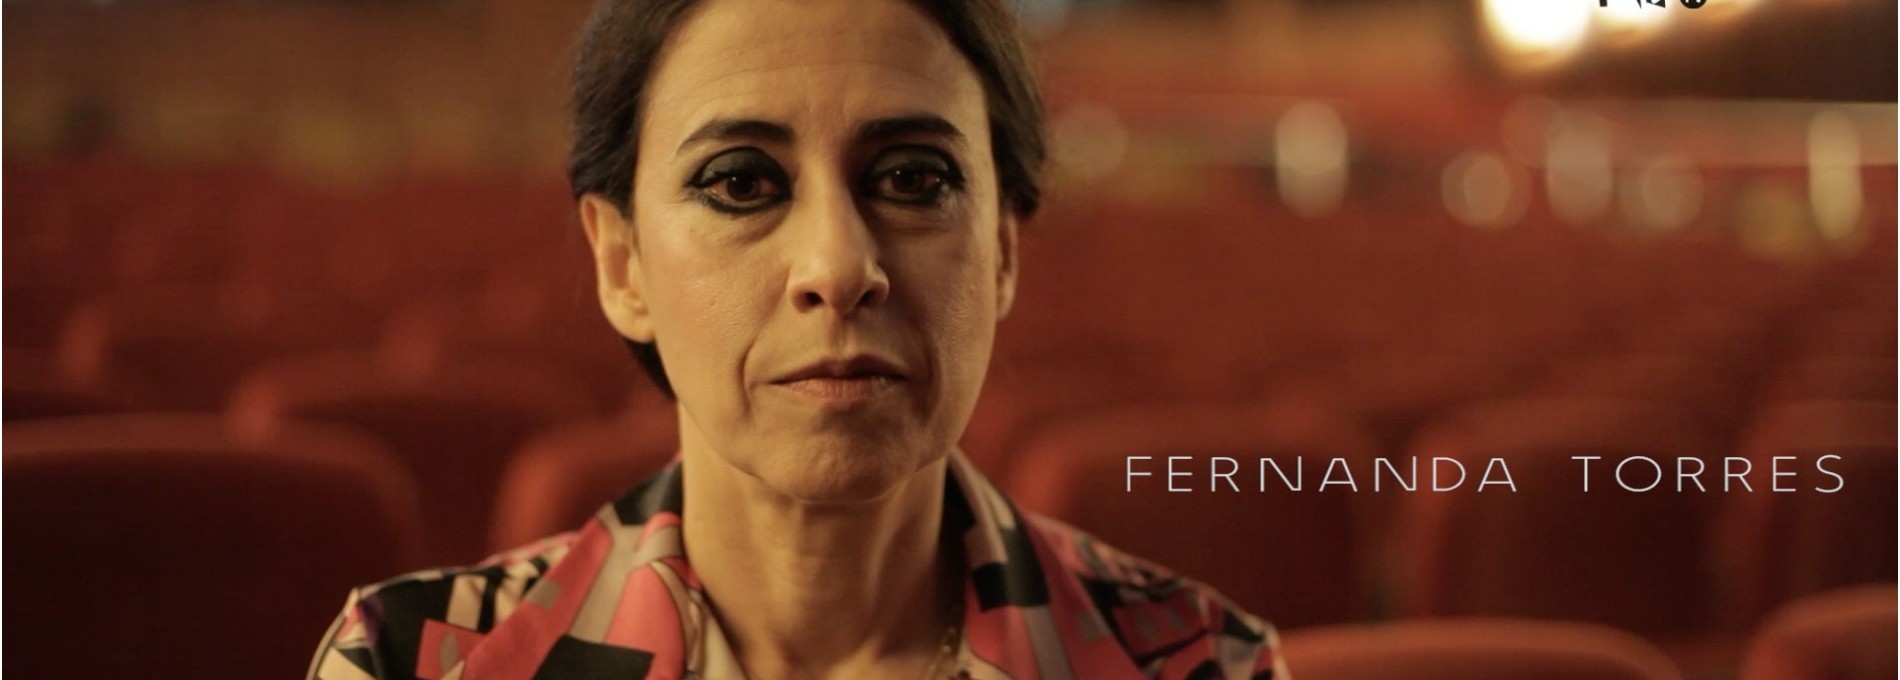 Entrevista com Fernanda Torres